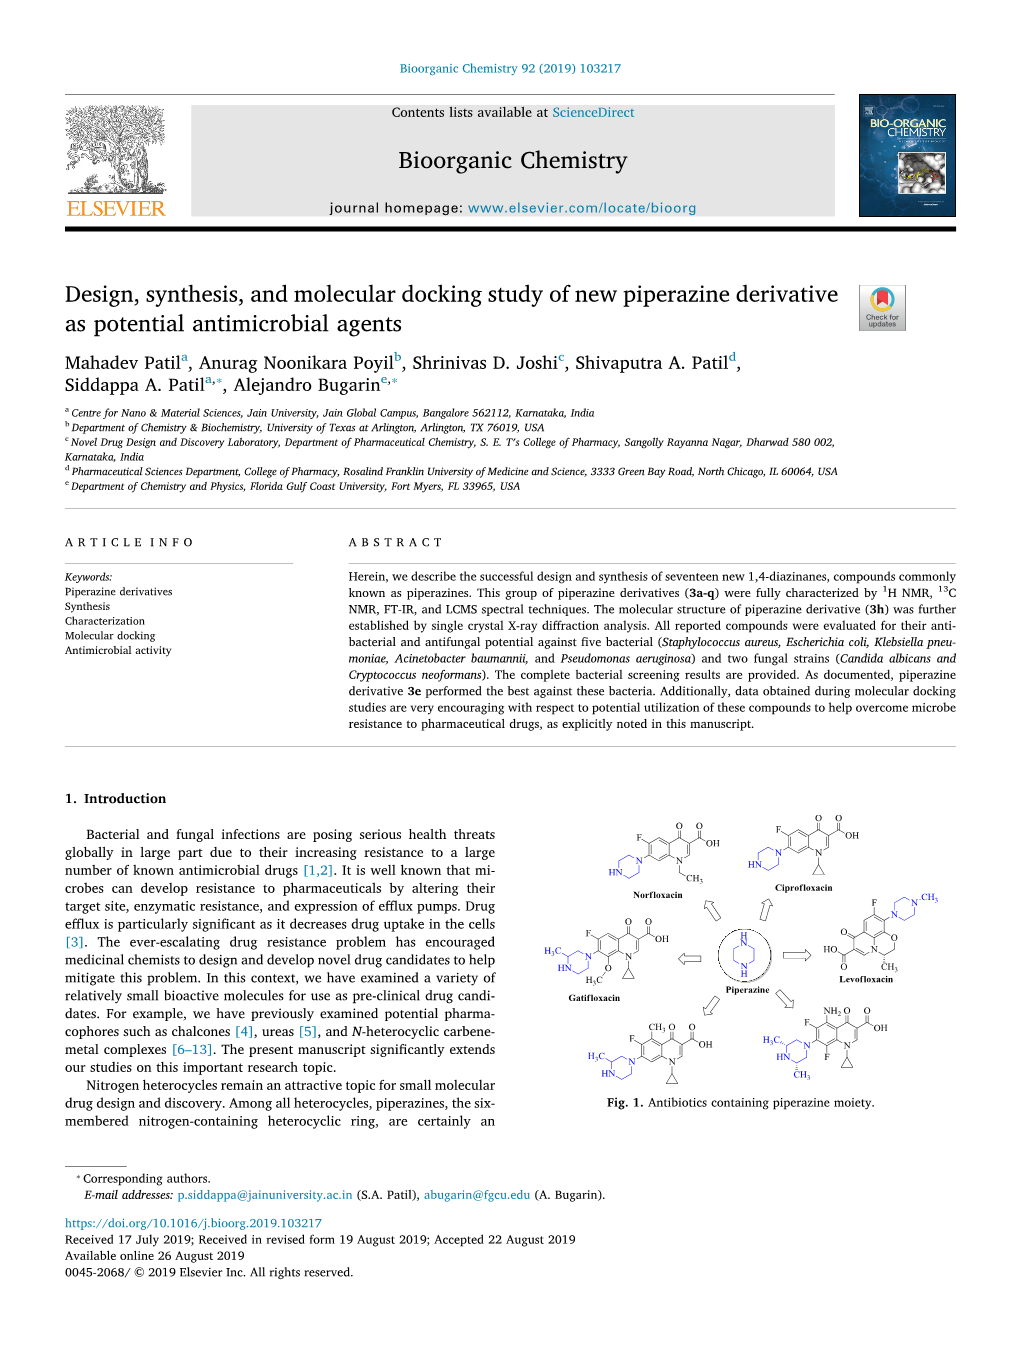 Design, Synthesis, and Molecular Docking Study of New Piperazine Derivative T As Potential Antimicrobial Agents Mahadev Patila, Anurag Noonikara Poyilb, Shrinivas D